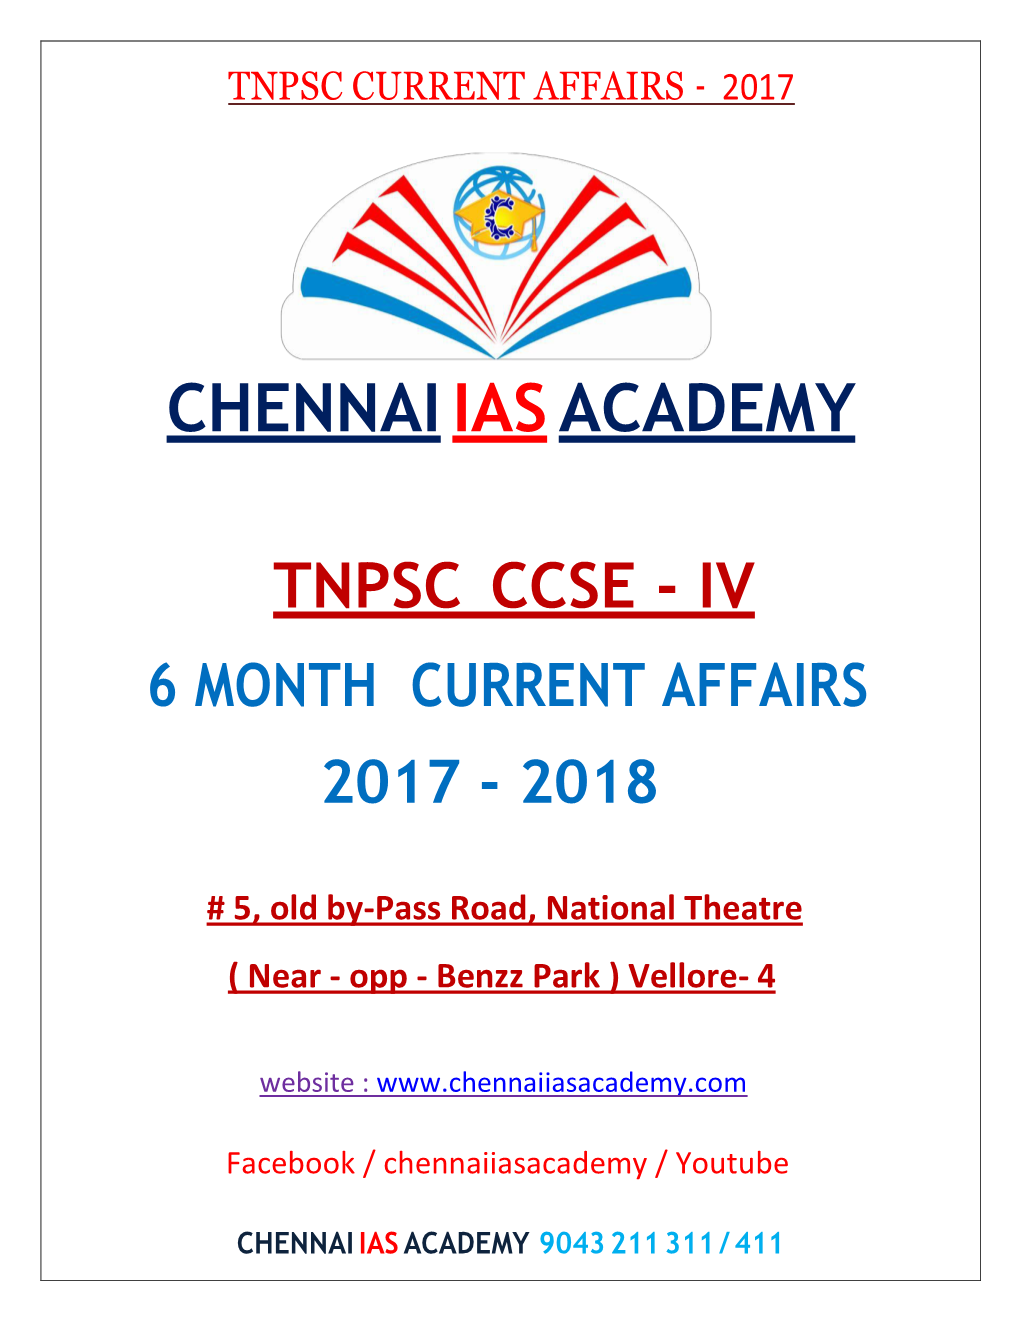 9043 211 311 / 411 Chennai Ias Academy – 9043 211 311 / 411